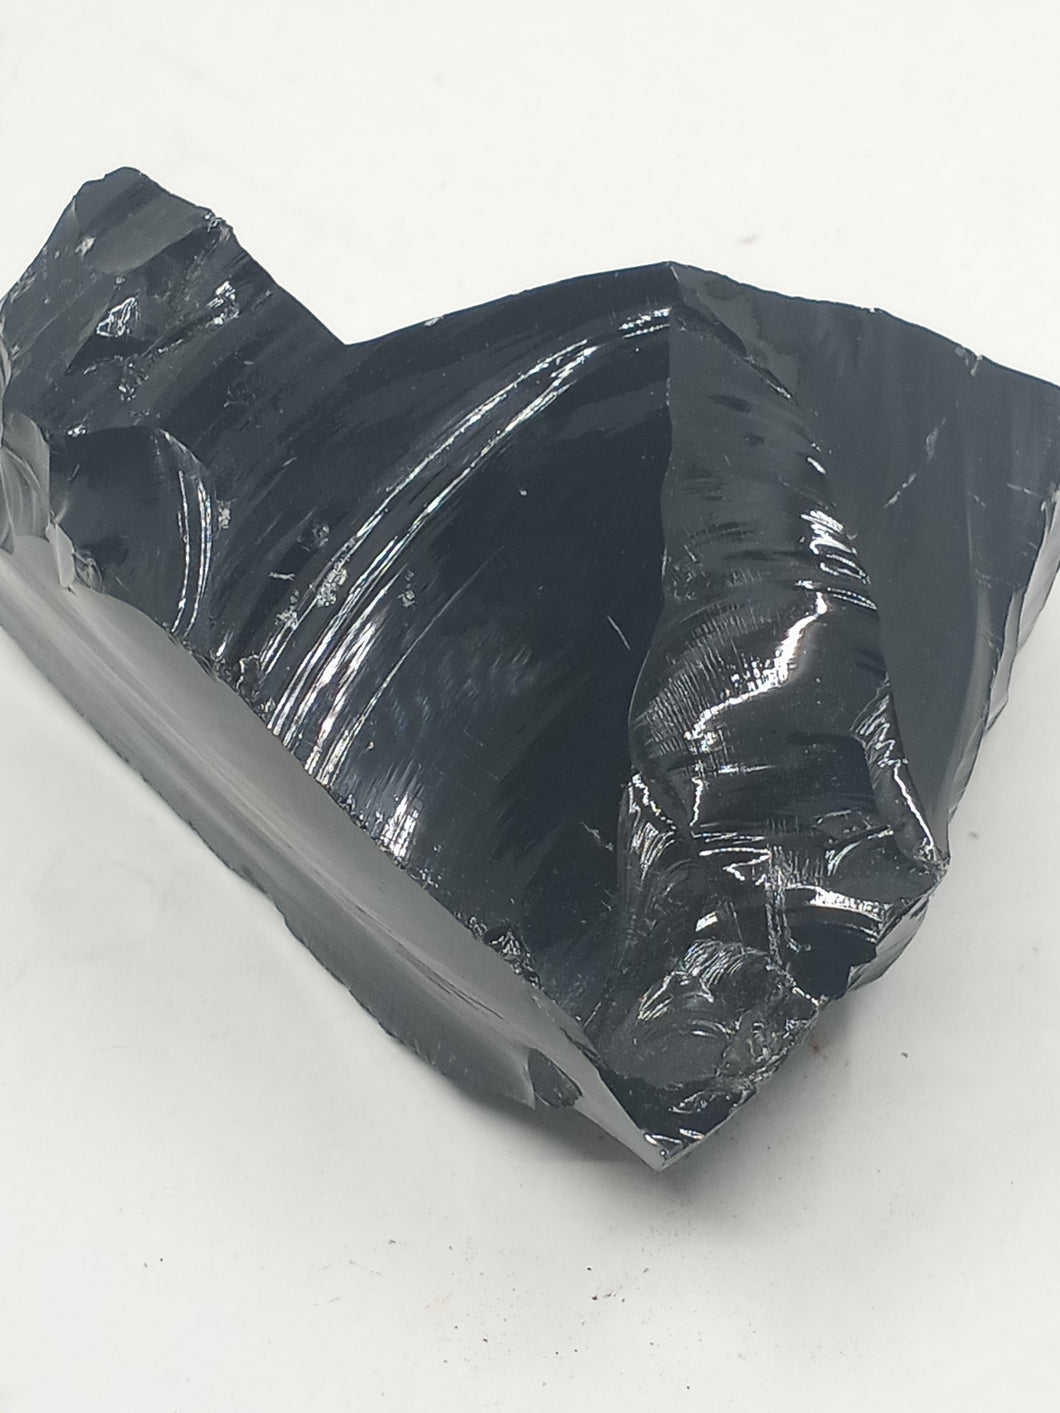 Obsidian Black Chunk Size 1 300-700g